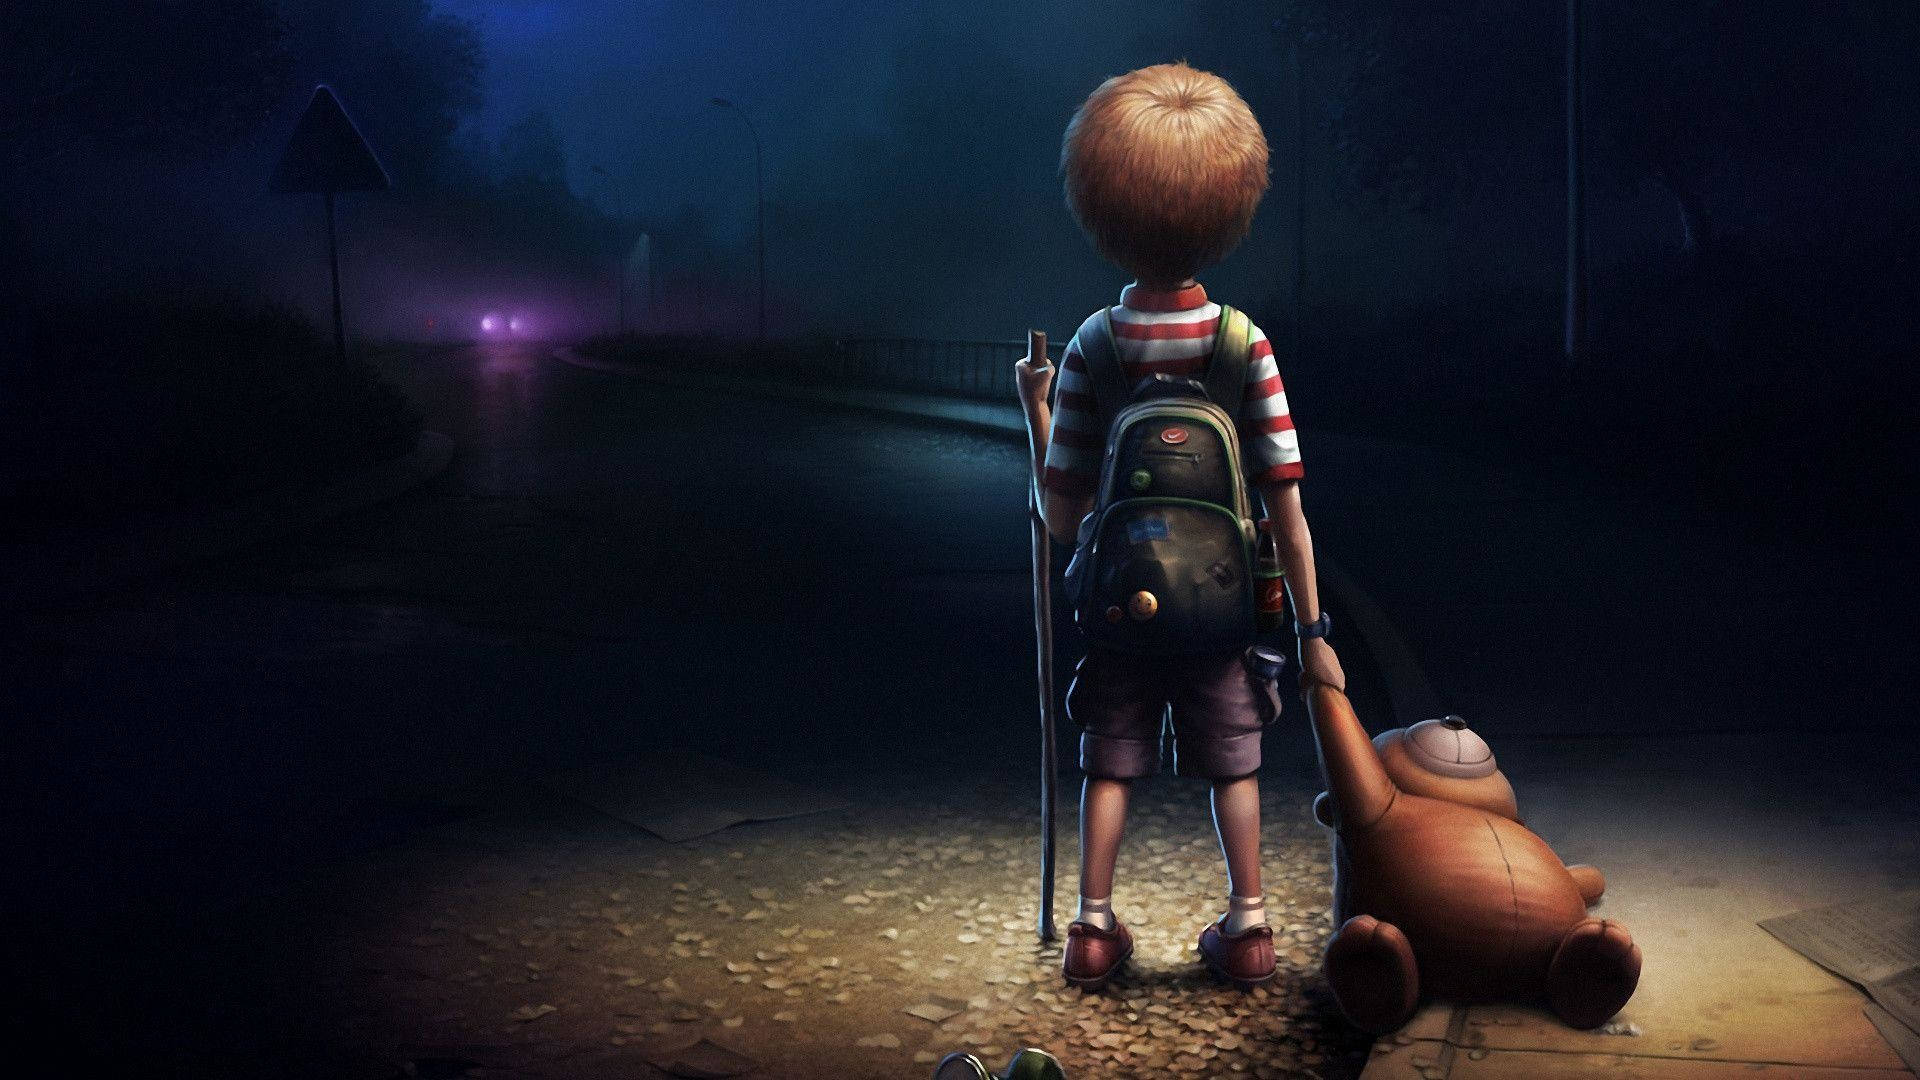 Lonely Boy Animation Background